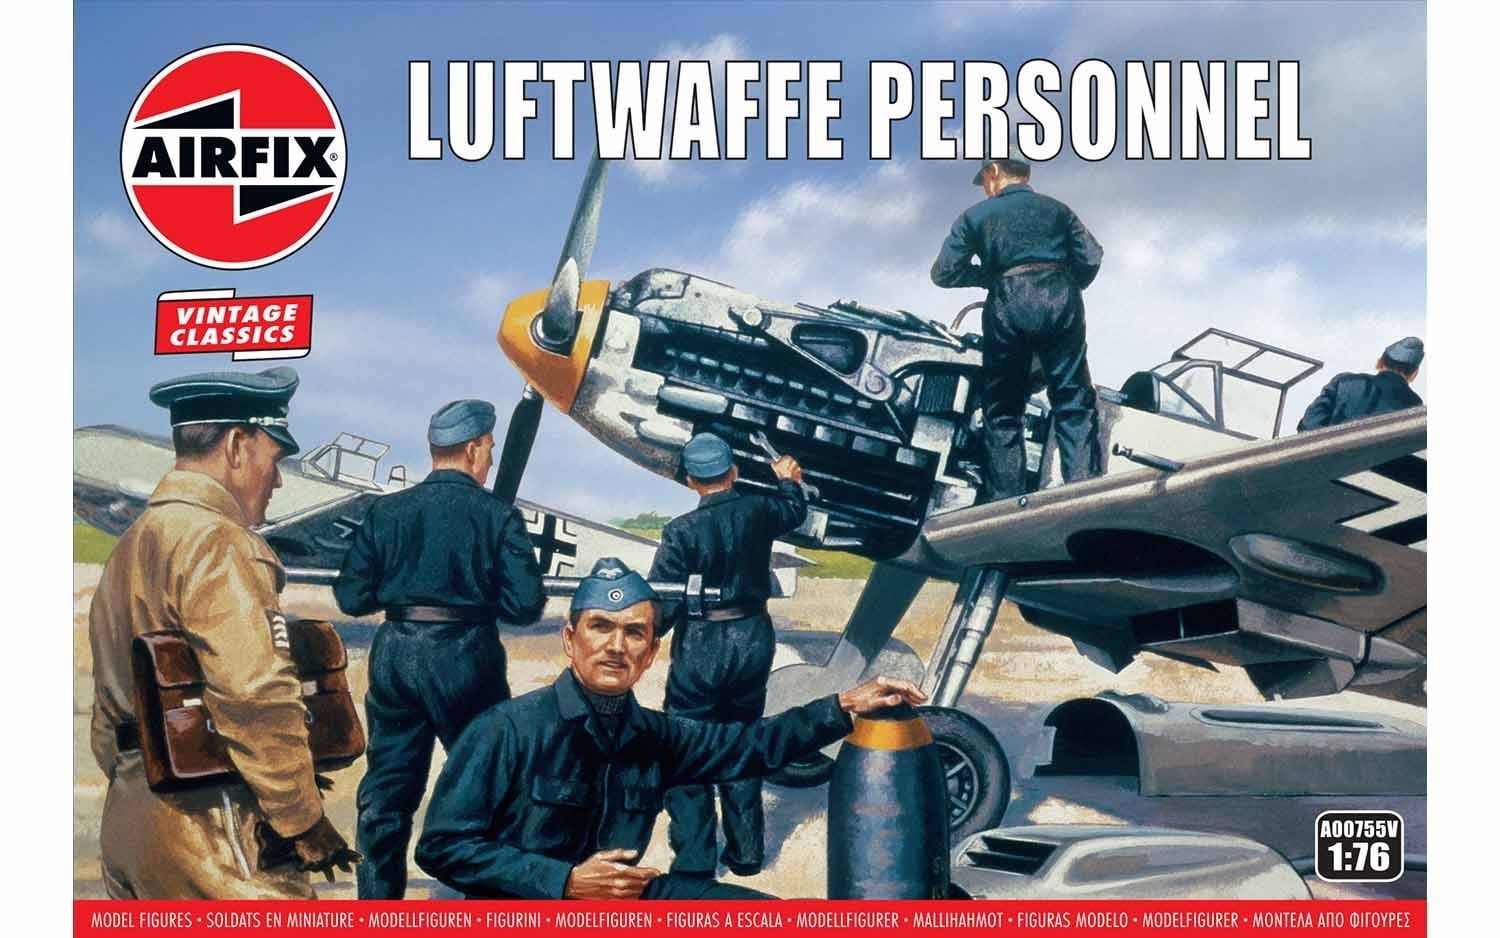 Airfix 1/76 Scale Luftwaffe Personnel Model Kit